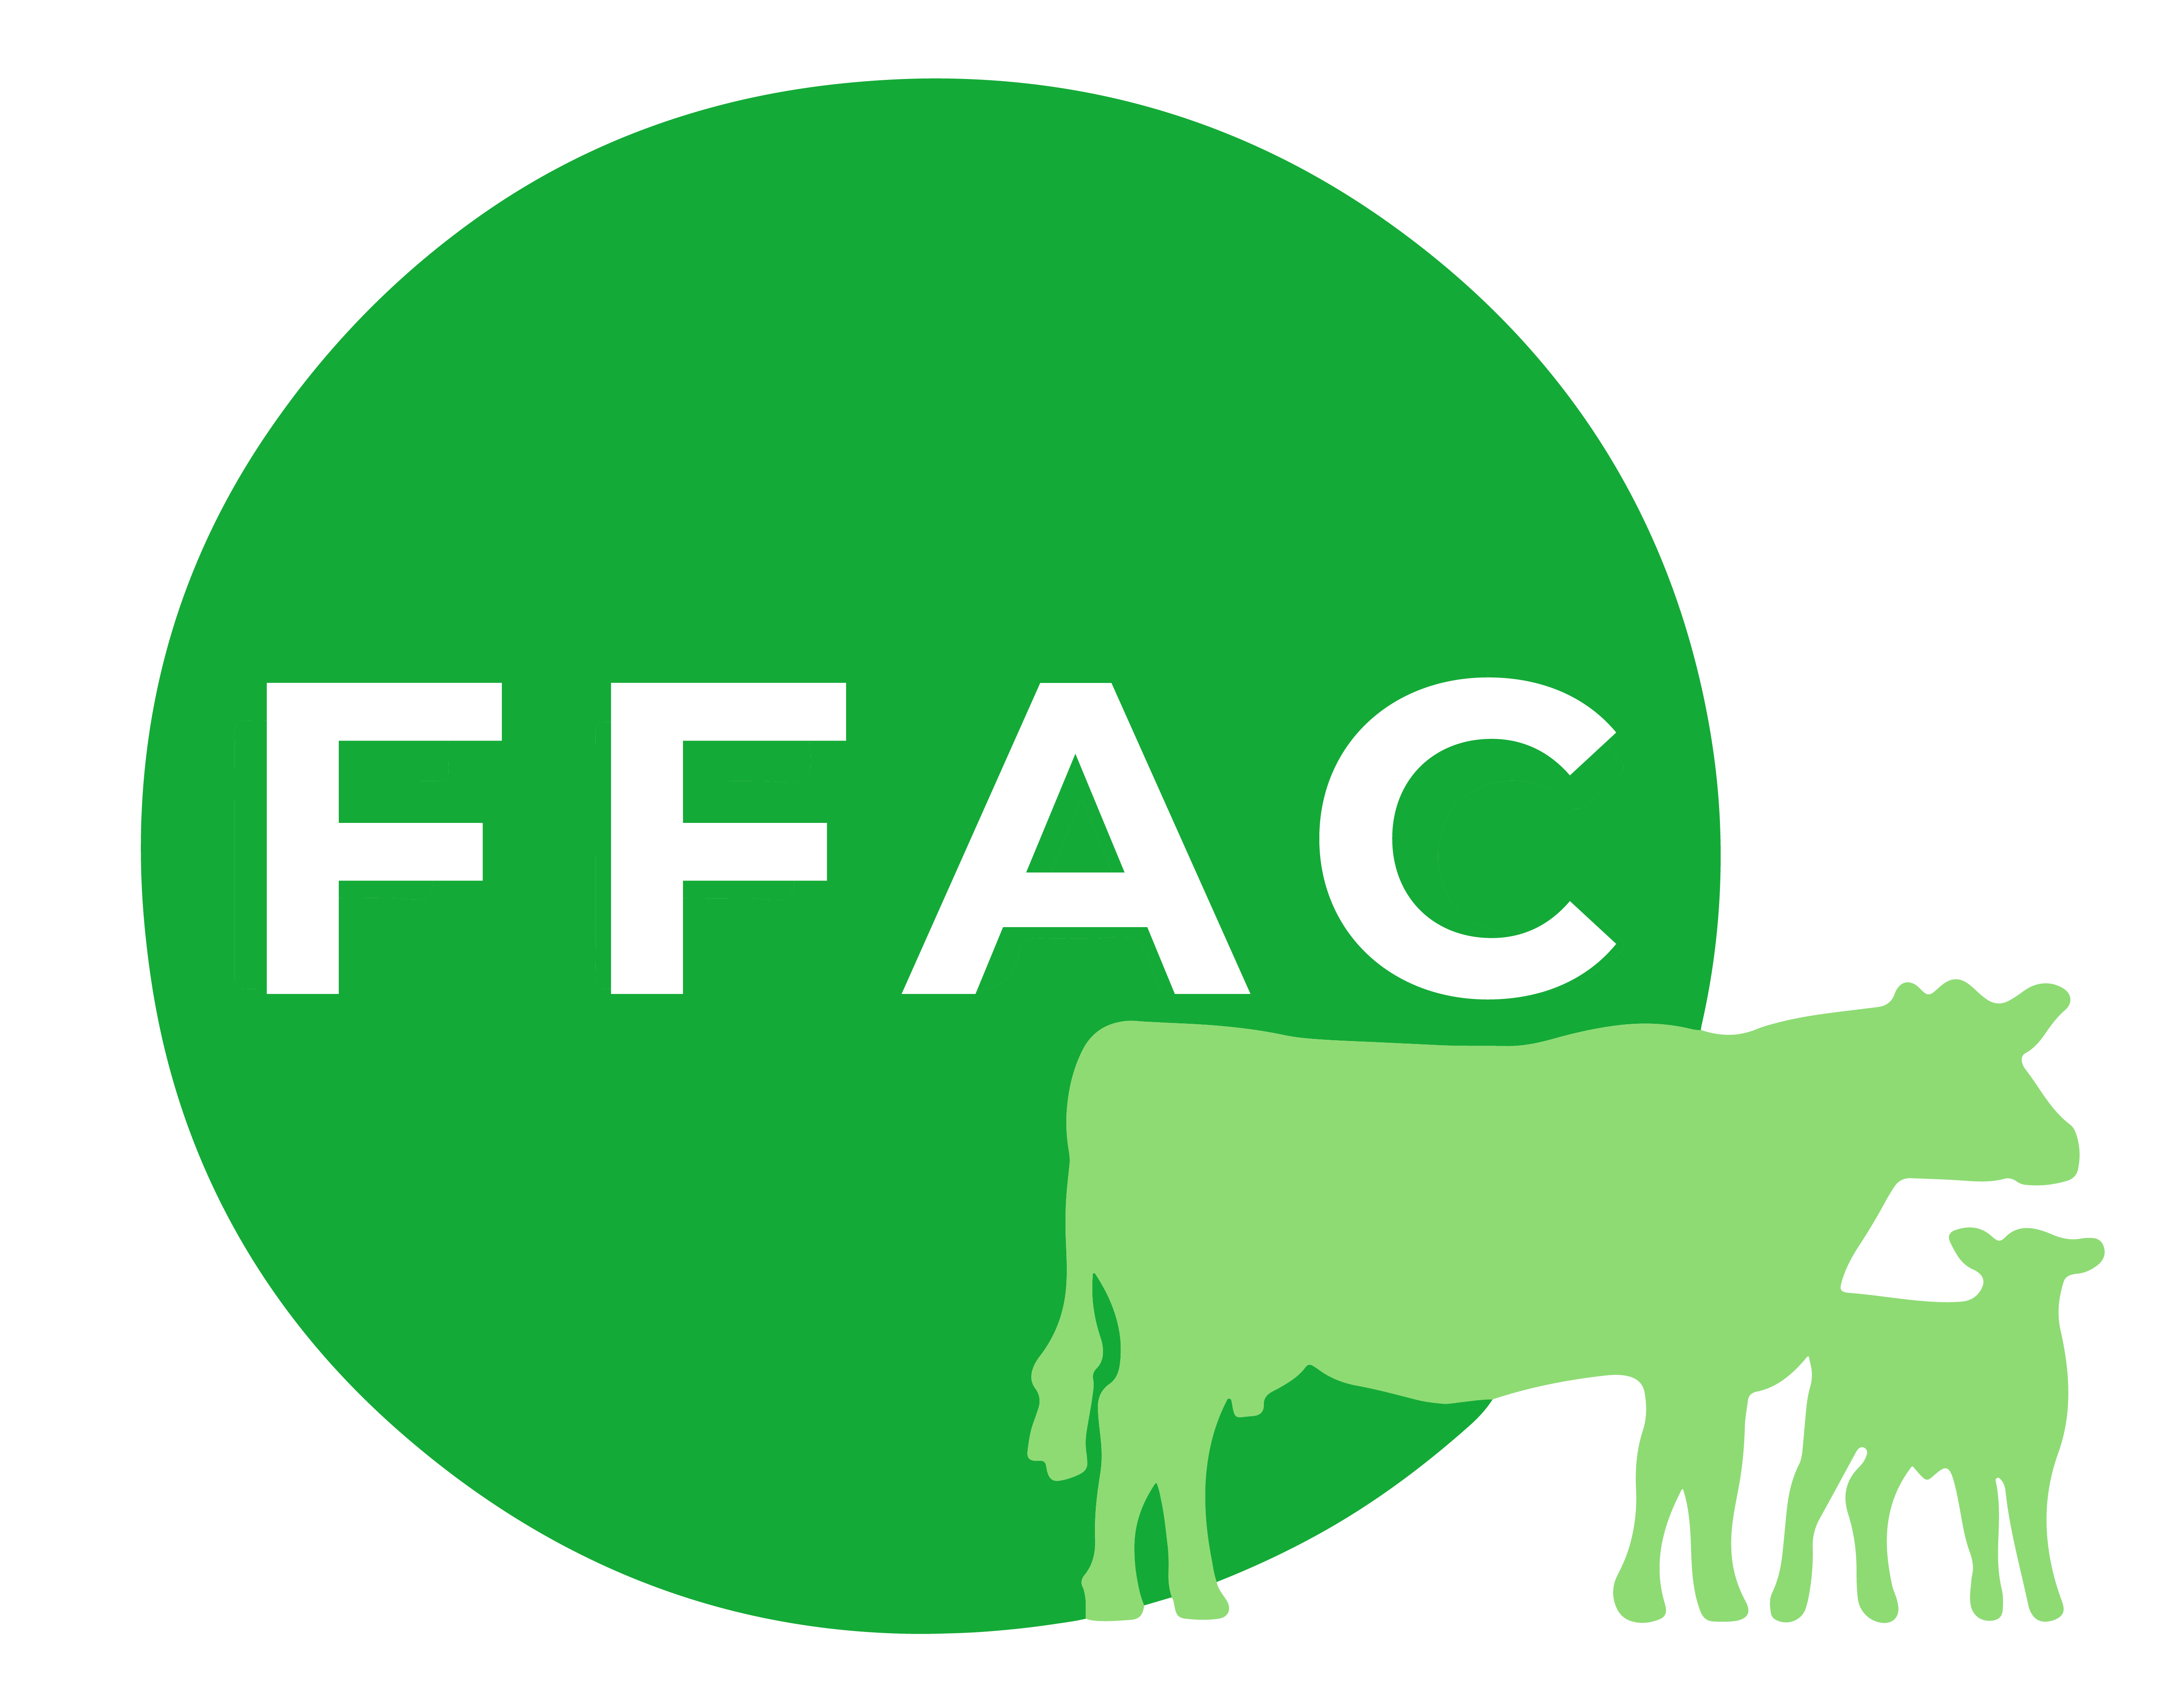 Factory Farming Awareness Coalition